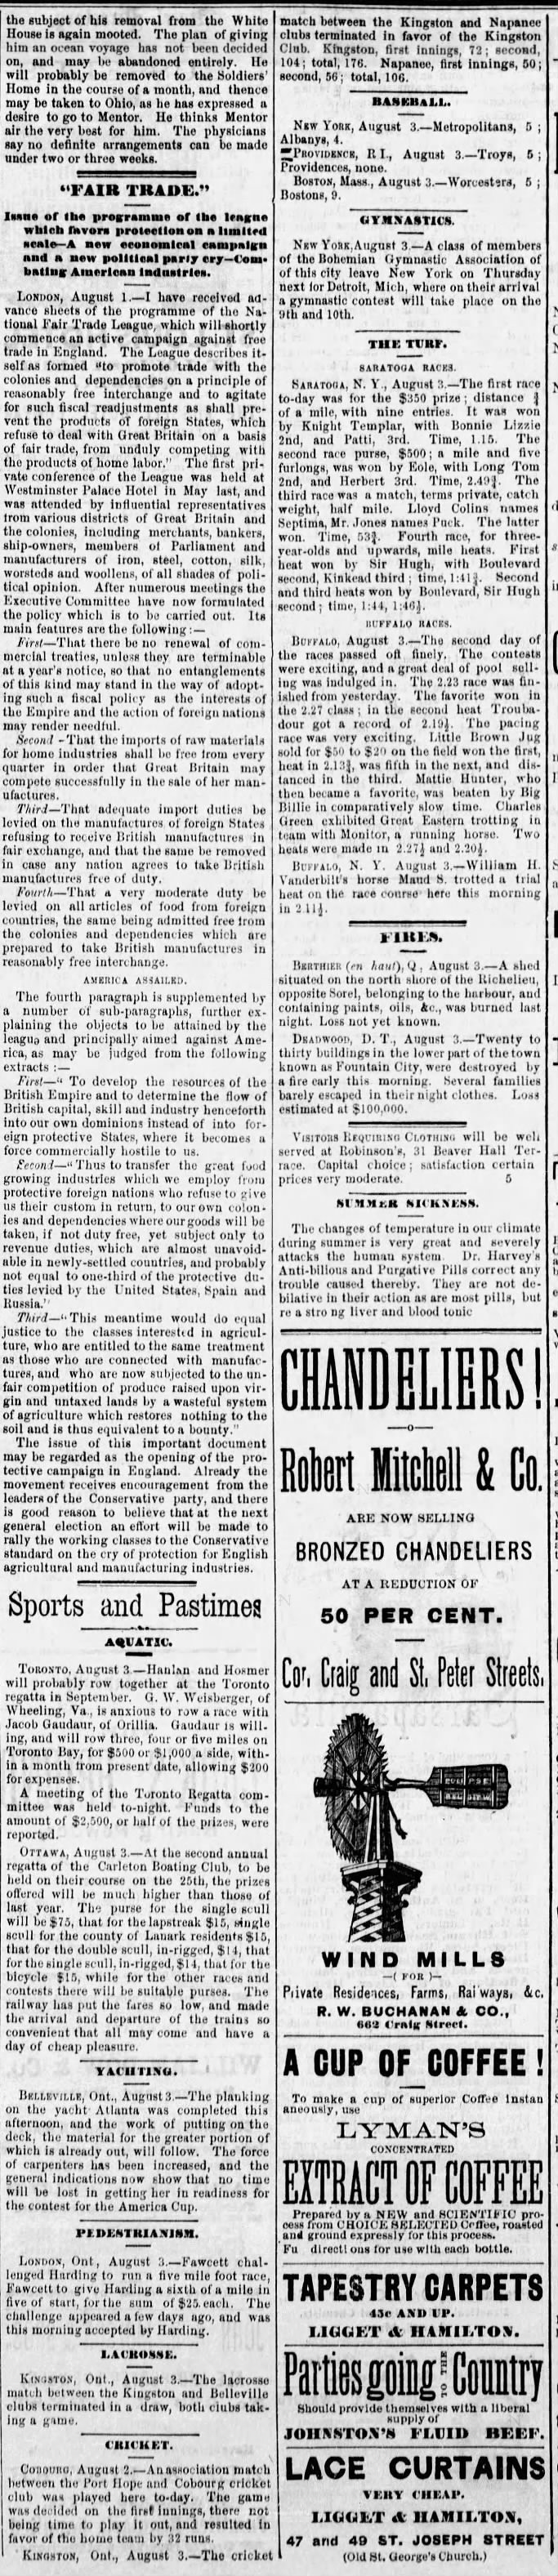 1881-08-04 Cricket -Cobourg vs Port Hope -Montreal Gazette